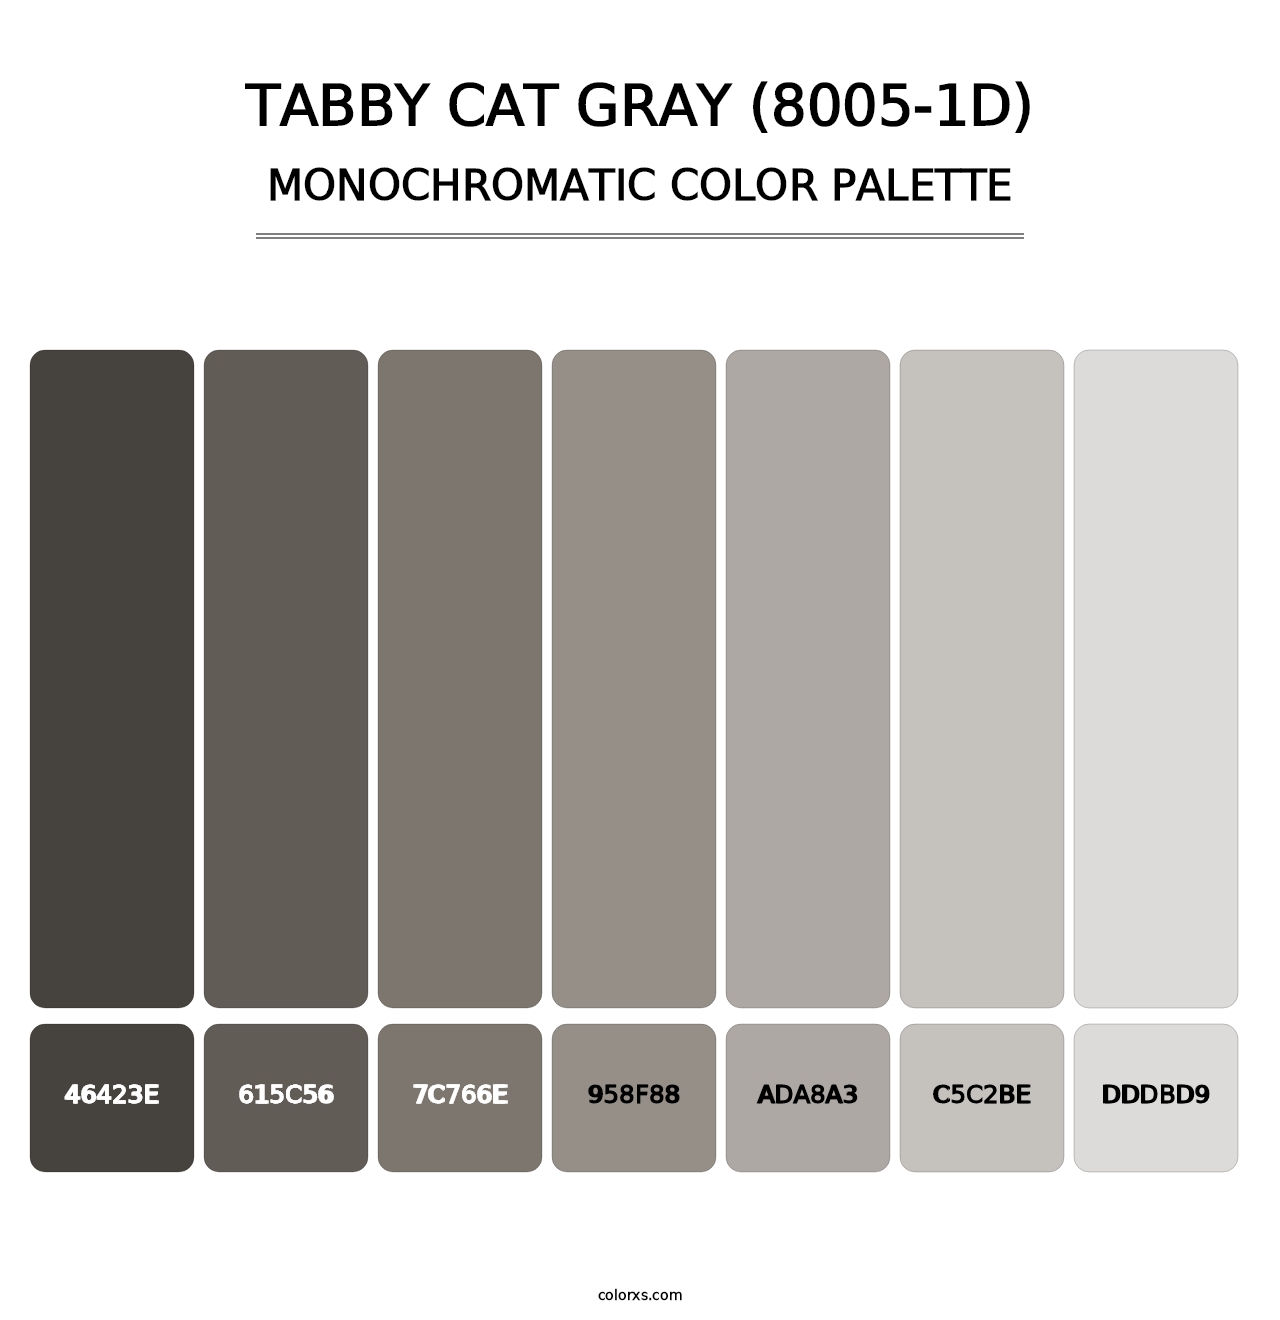 Tabby Cat Gray (8005-1D) - Monochromatic Color Palette